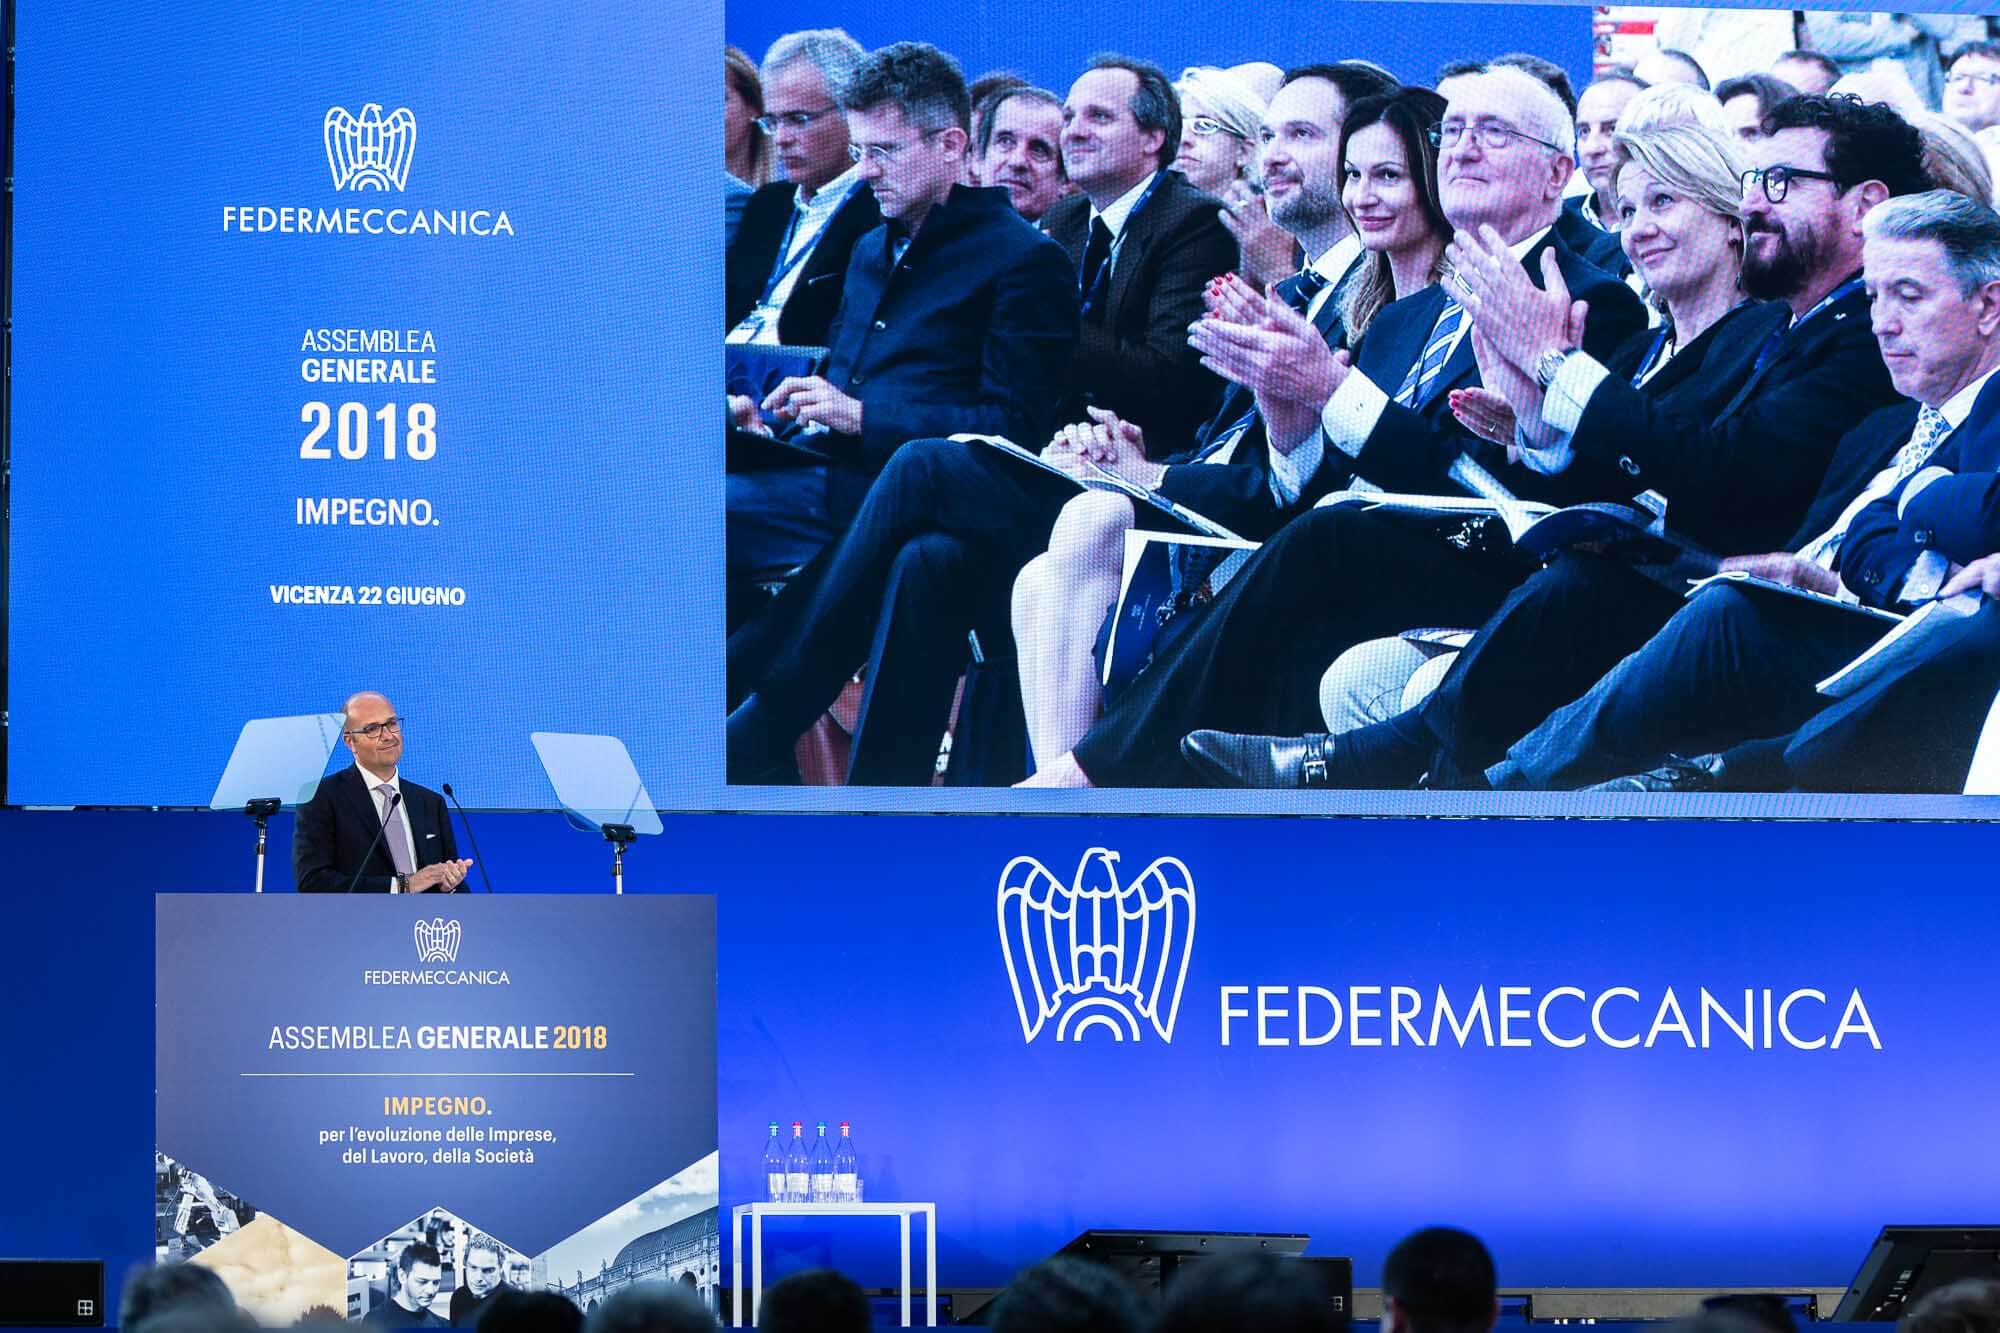 Assemblea generale 2018 Federmeccanica - evento on stage